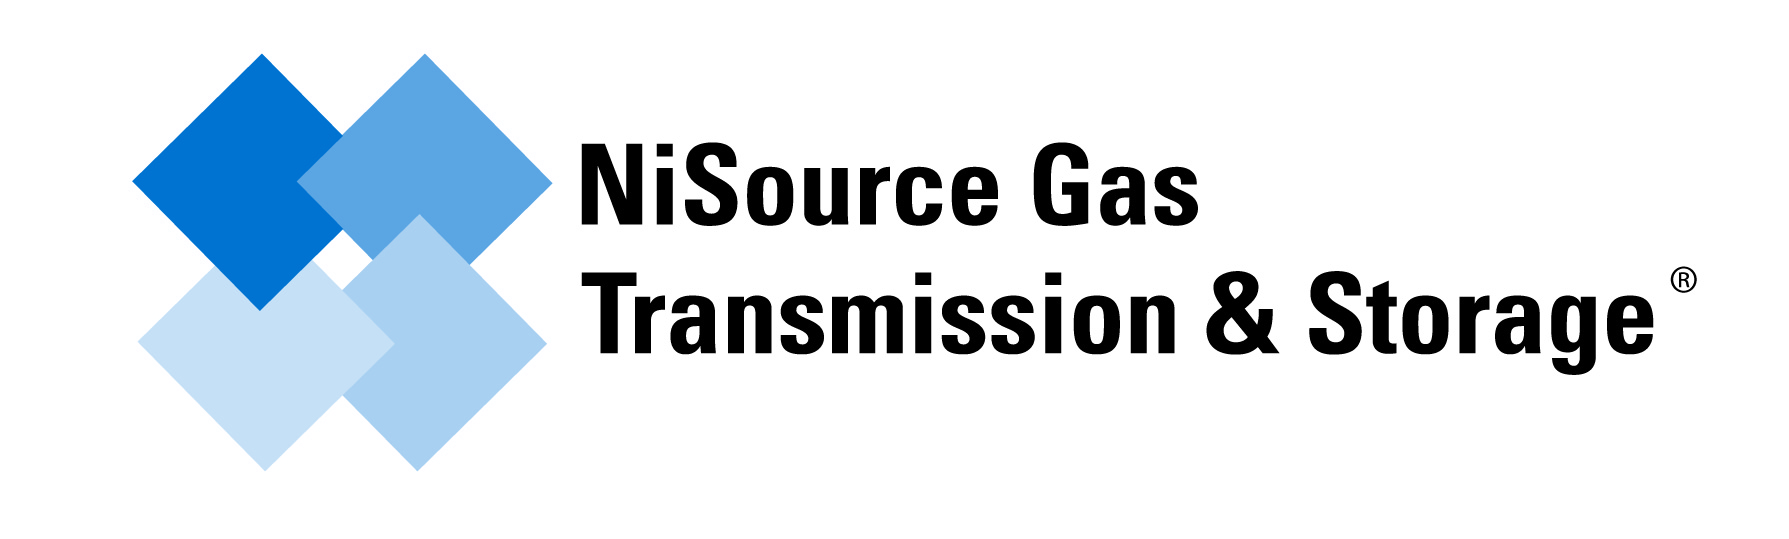 NiSource Gas Trans  Storage 2 color.jpg